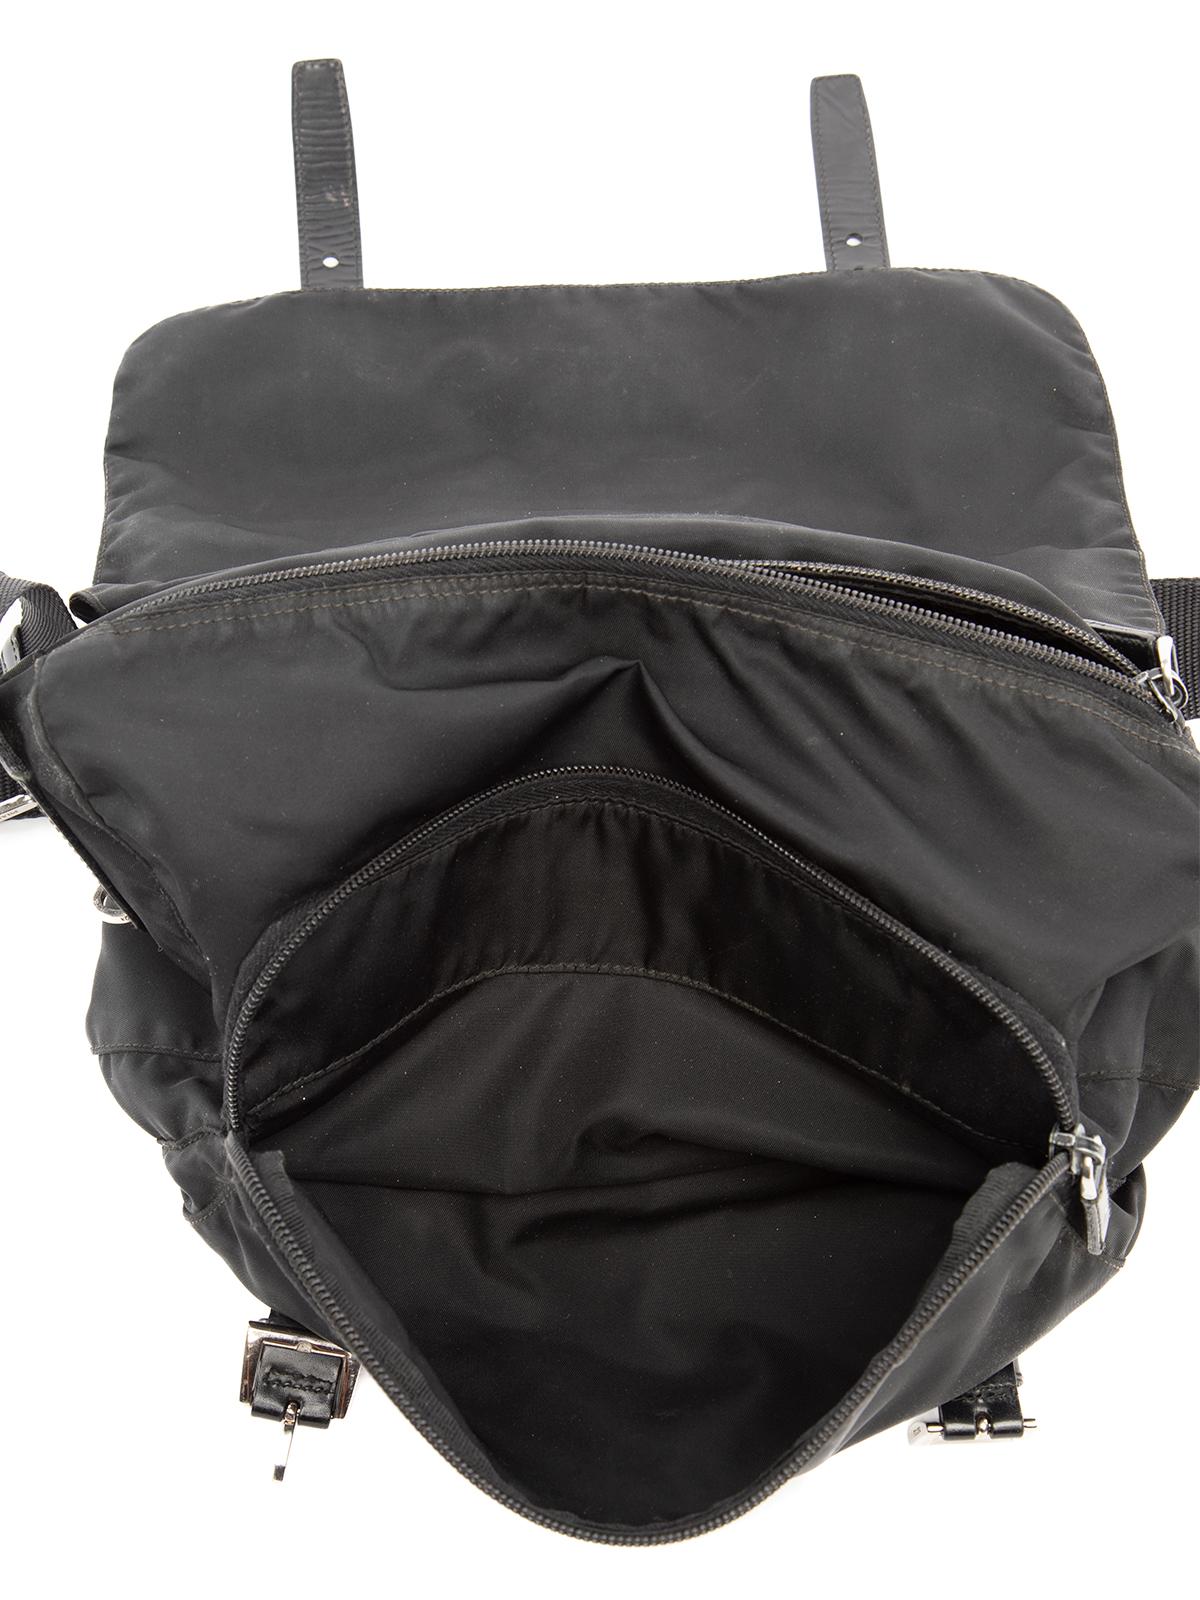 Pre-Loved Prada Women's Nylon buckle Bag 2